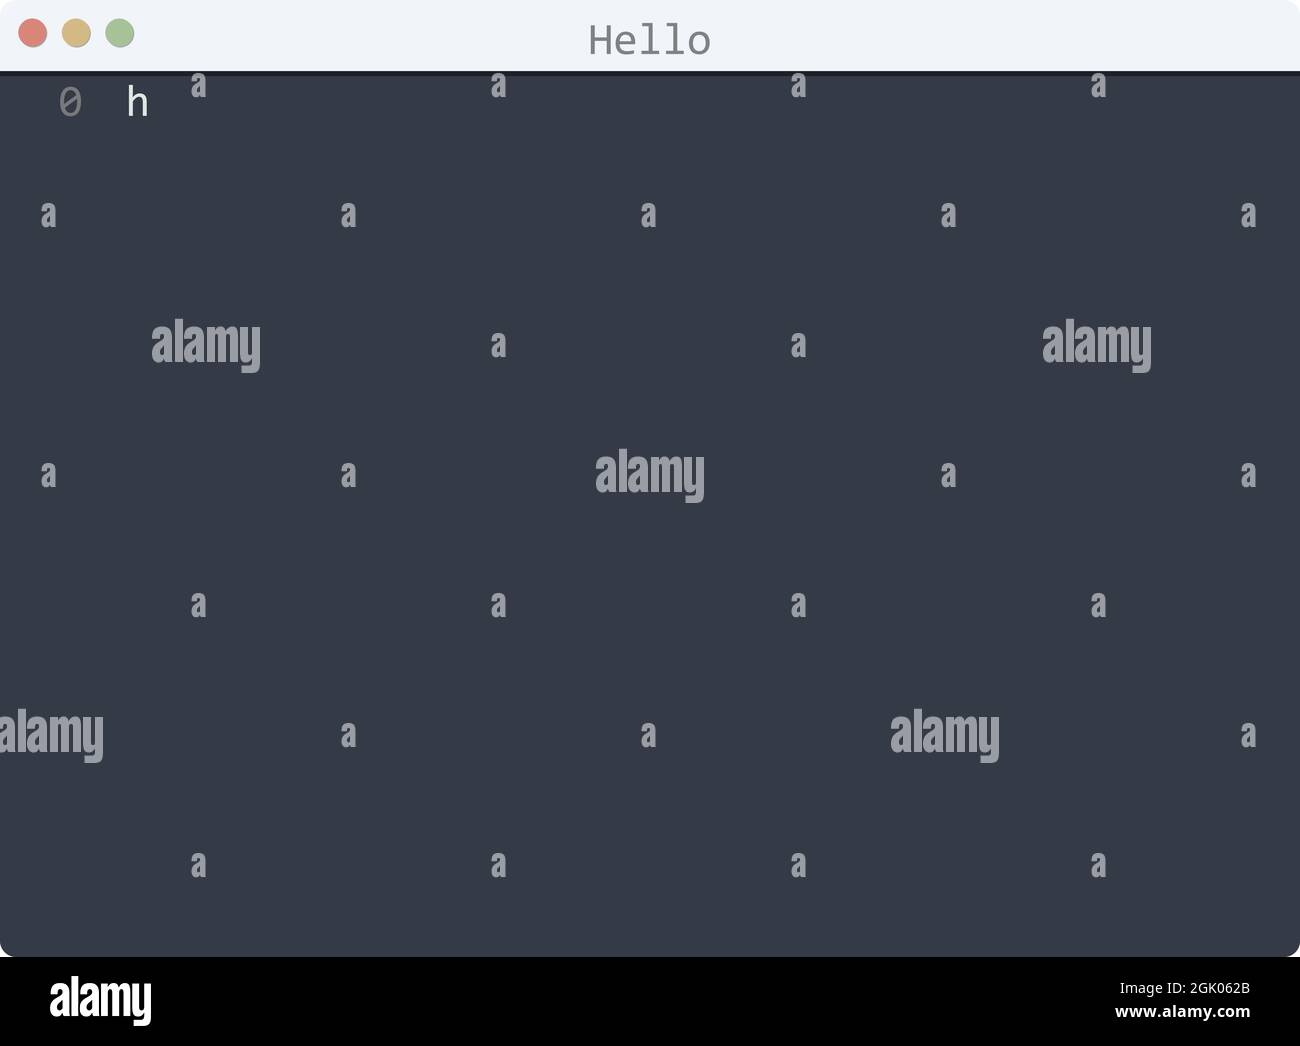 Hello language Hello World program sample in editor window illustration Stock Vector